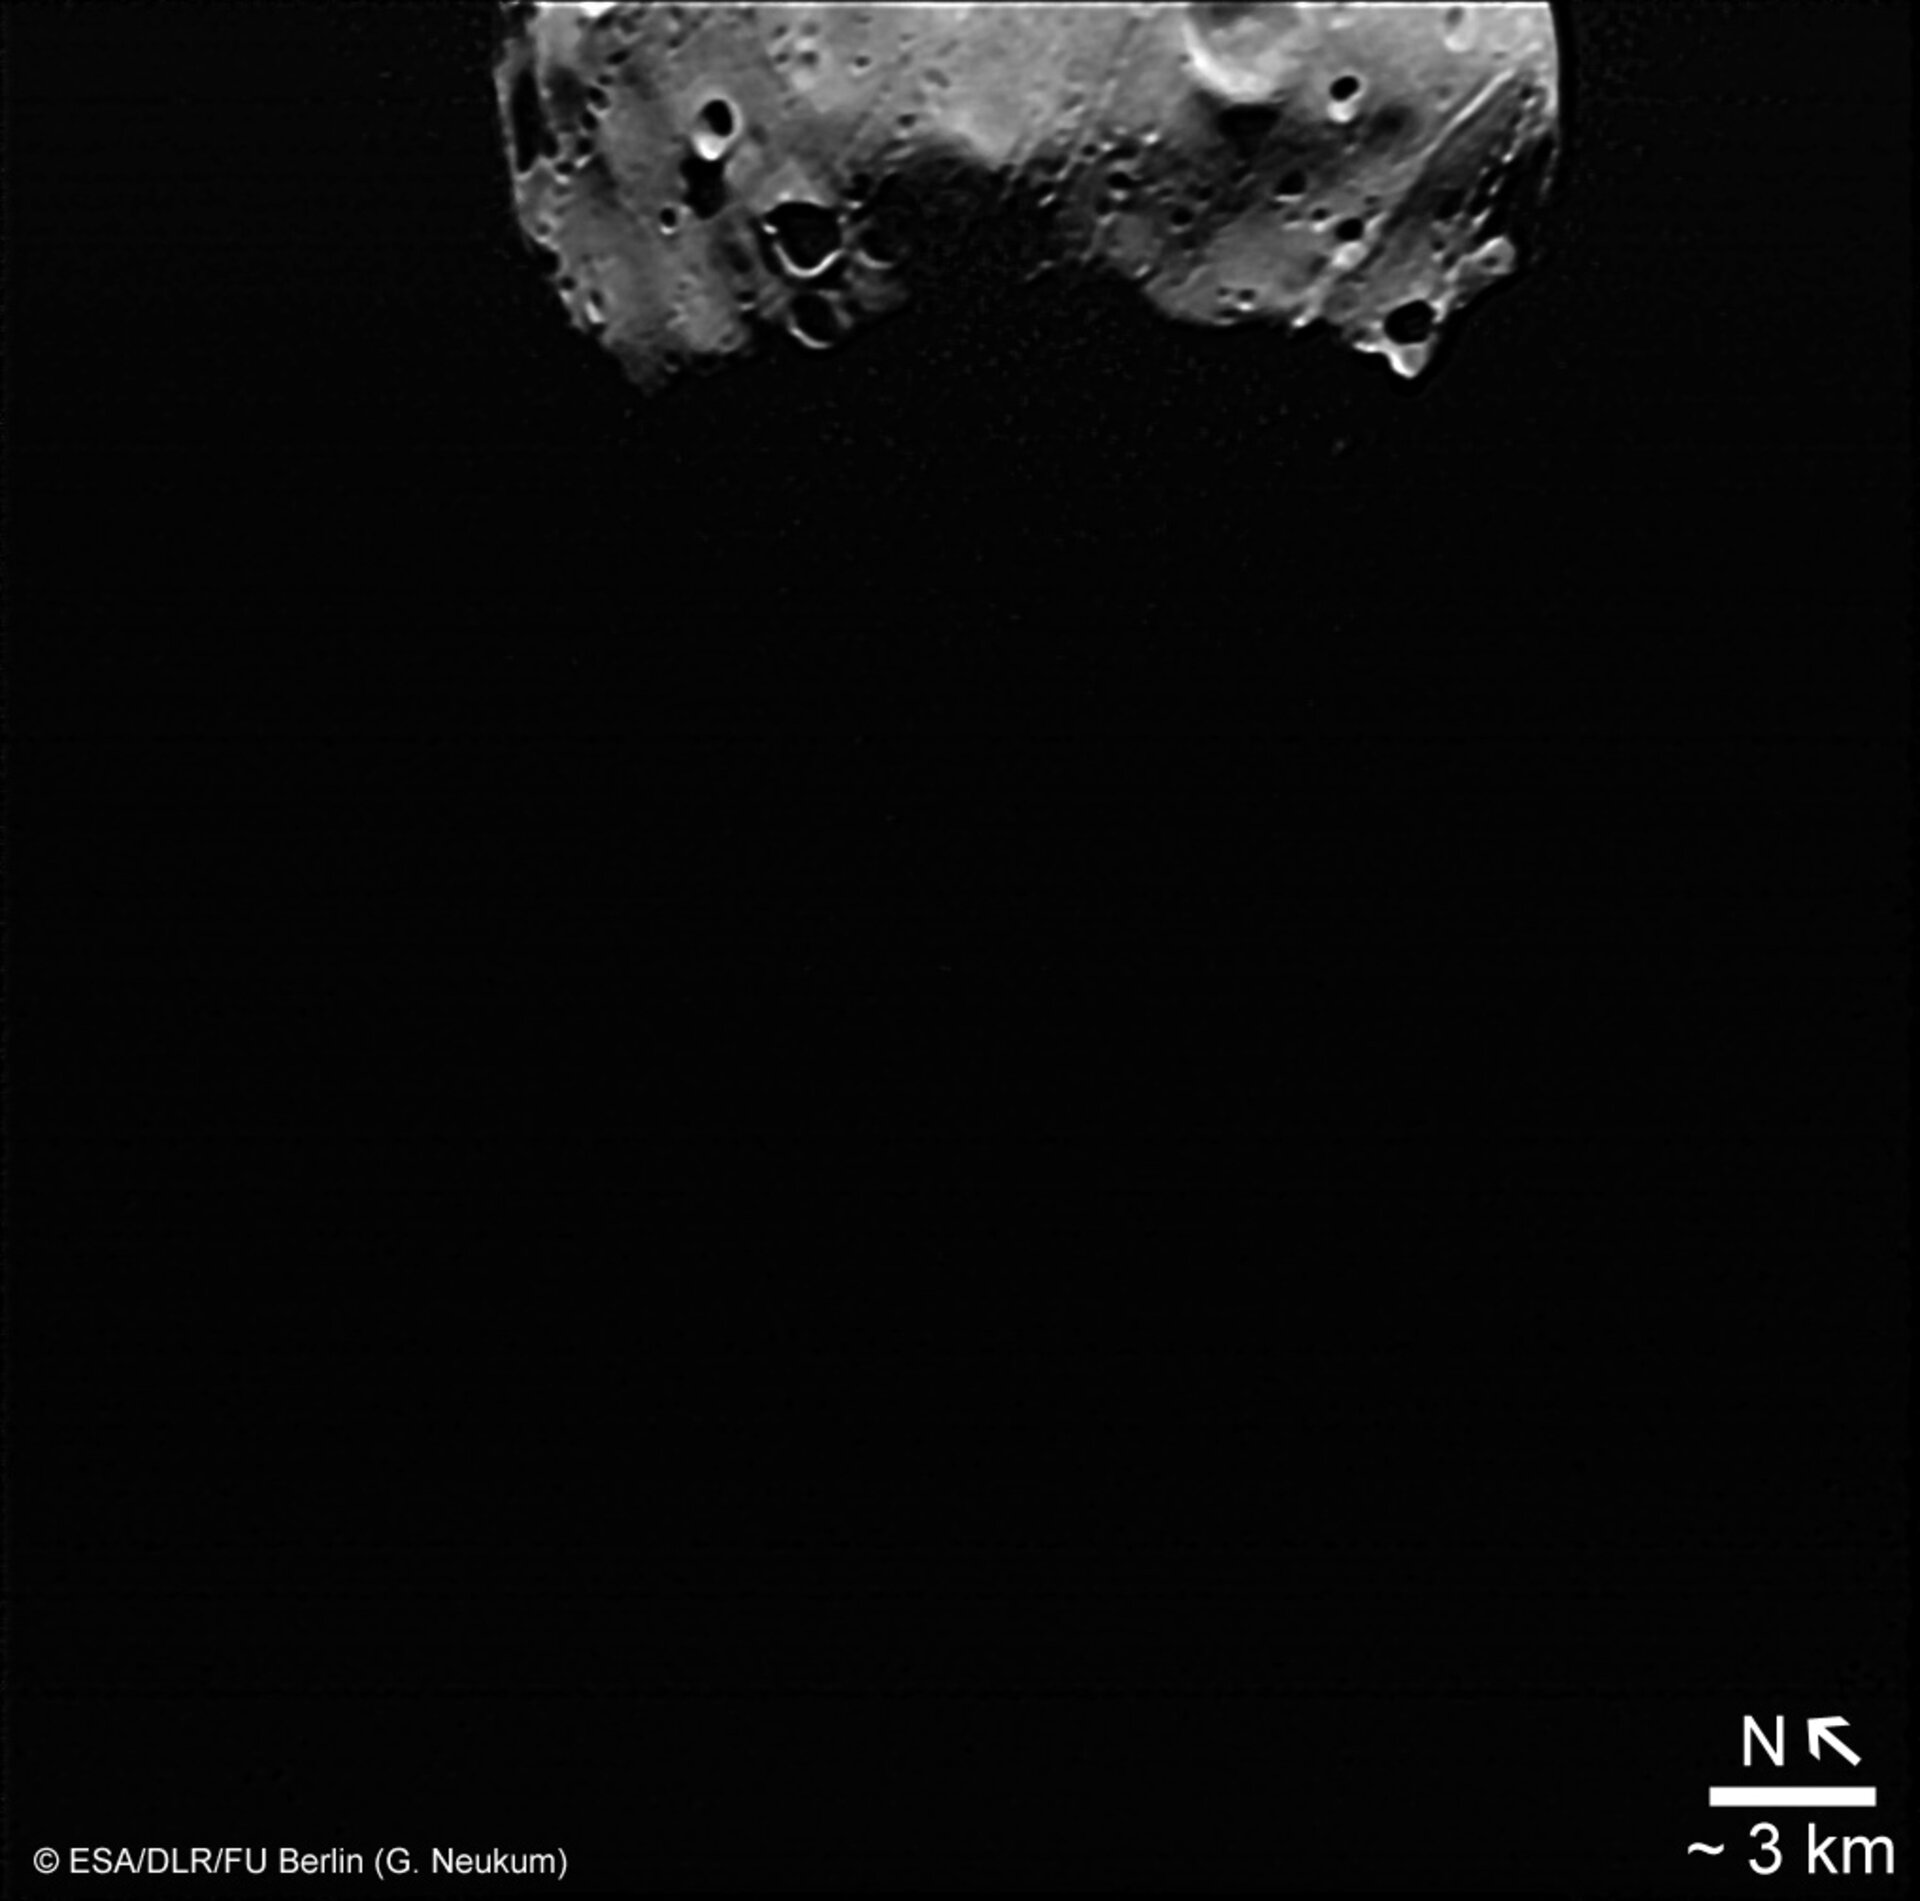 View of Phobos